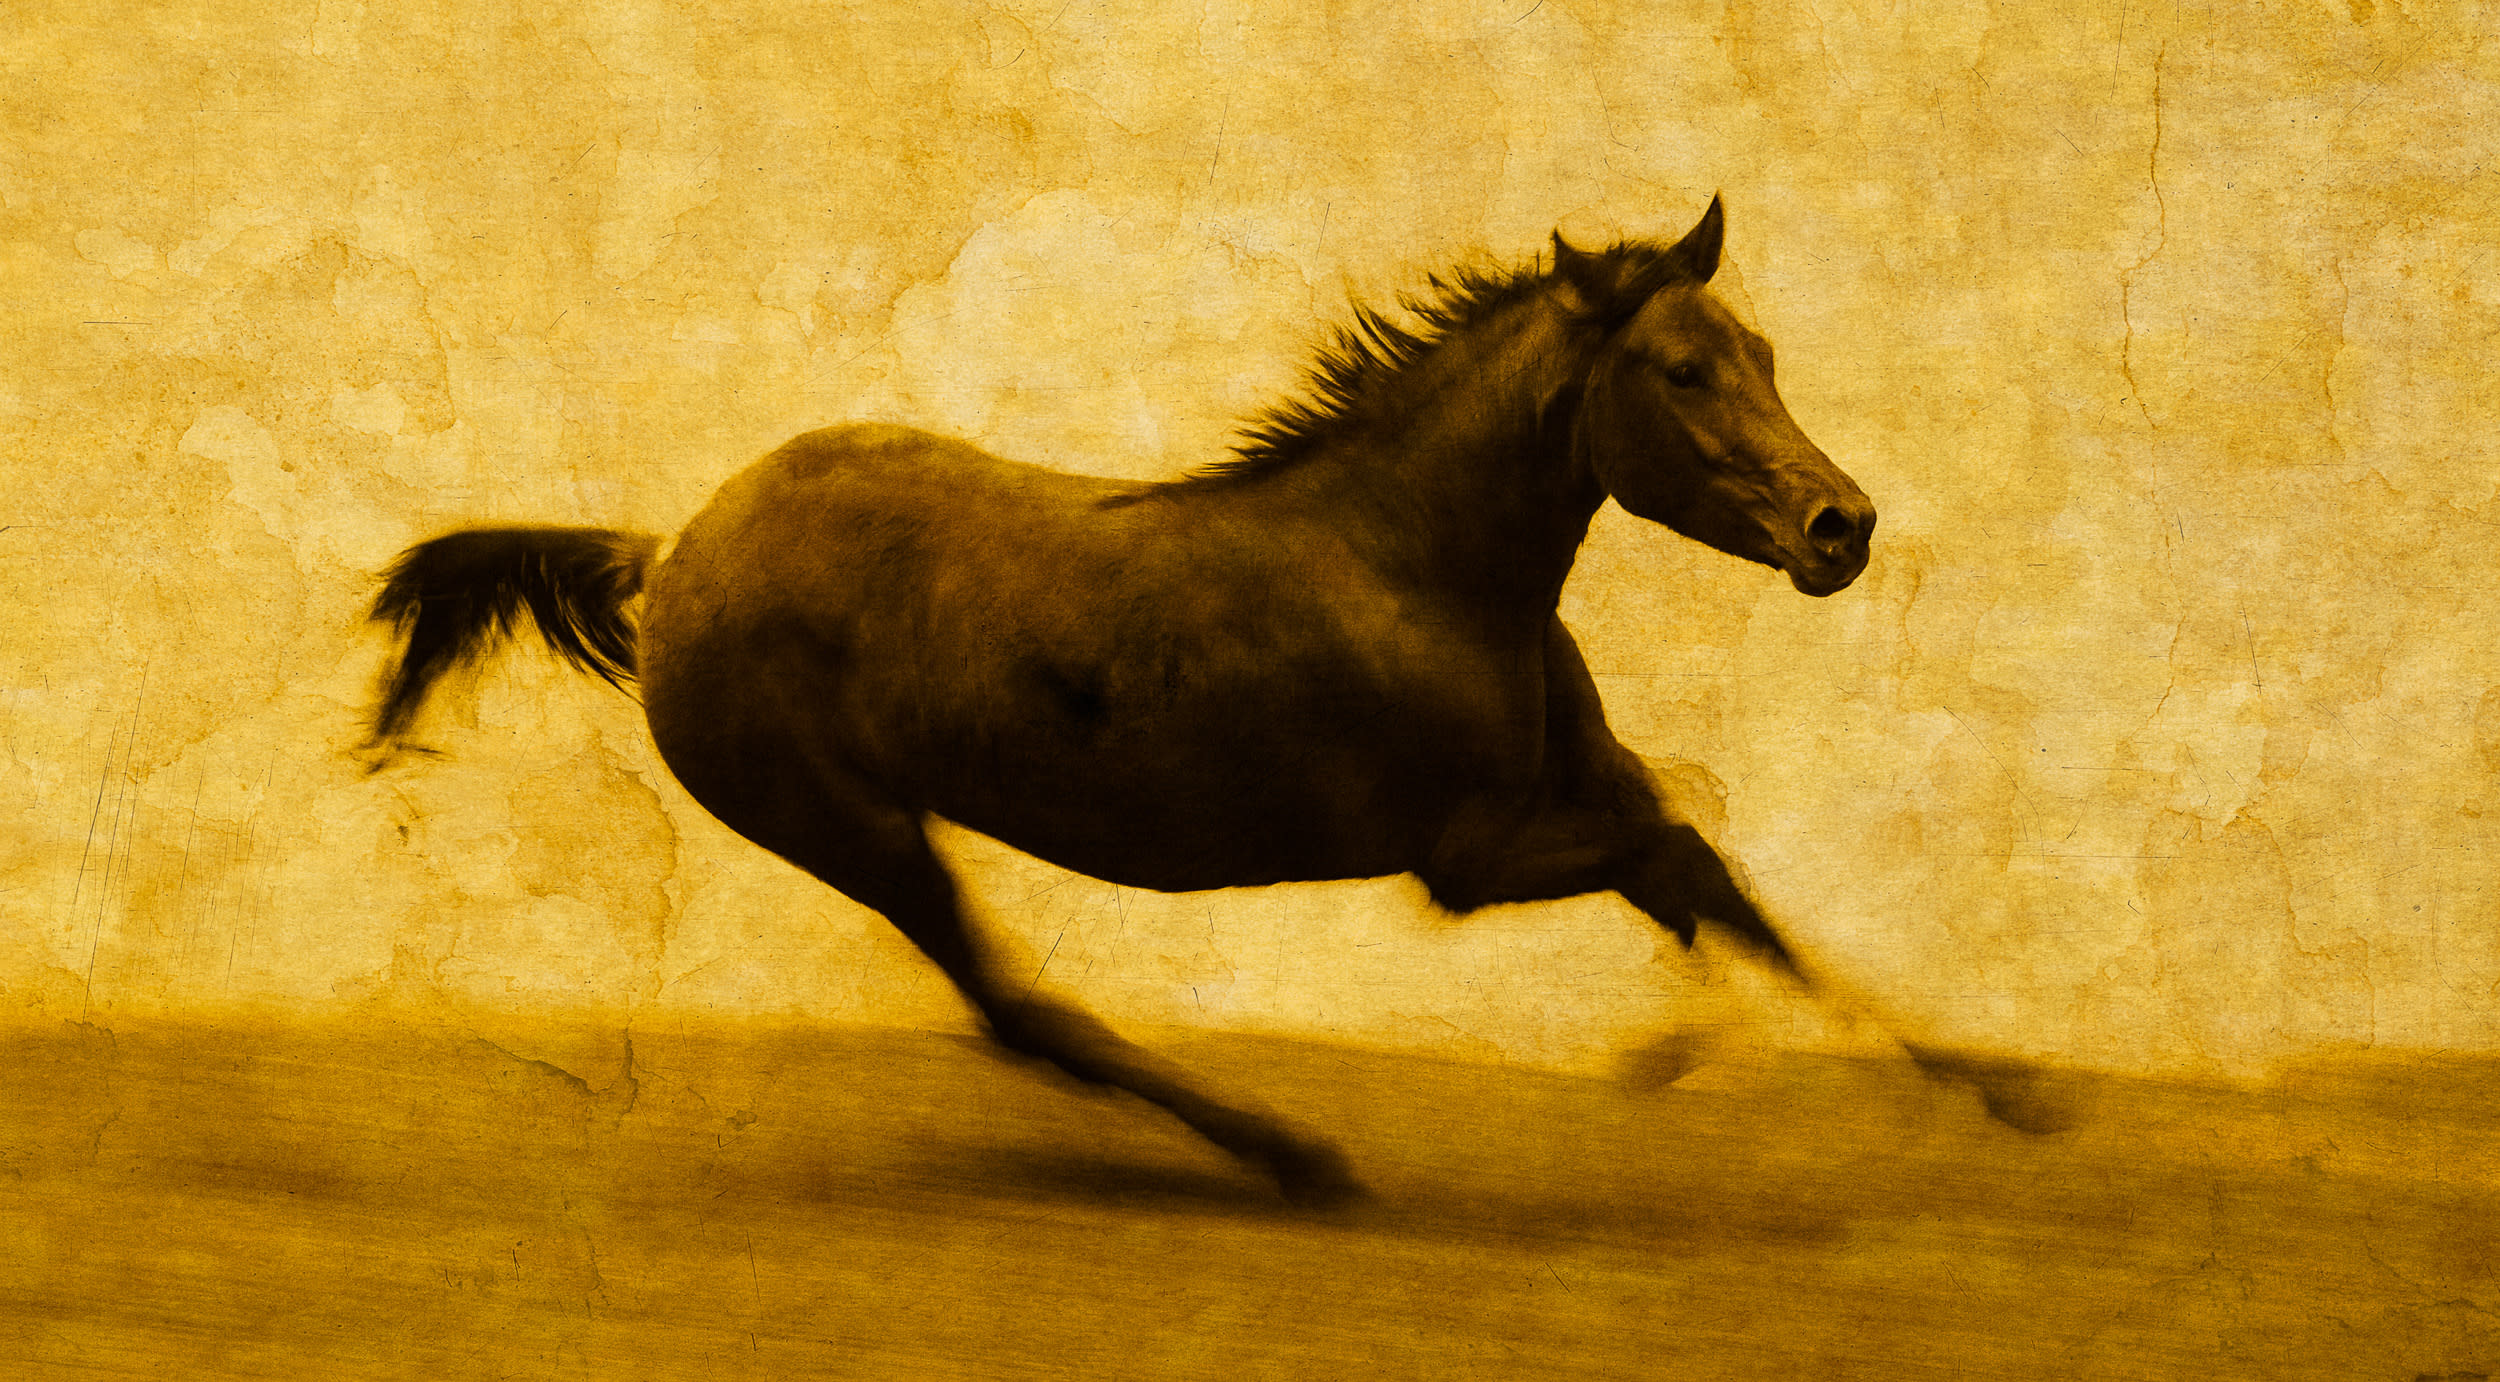 Horse 1319 ybaric